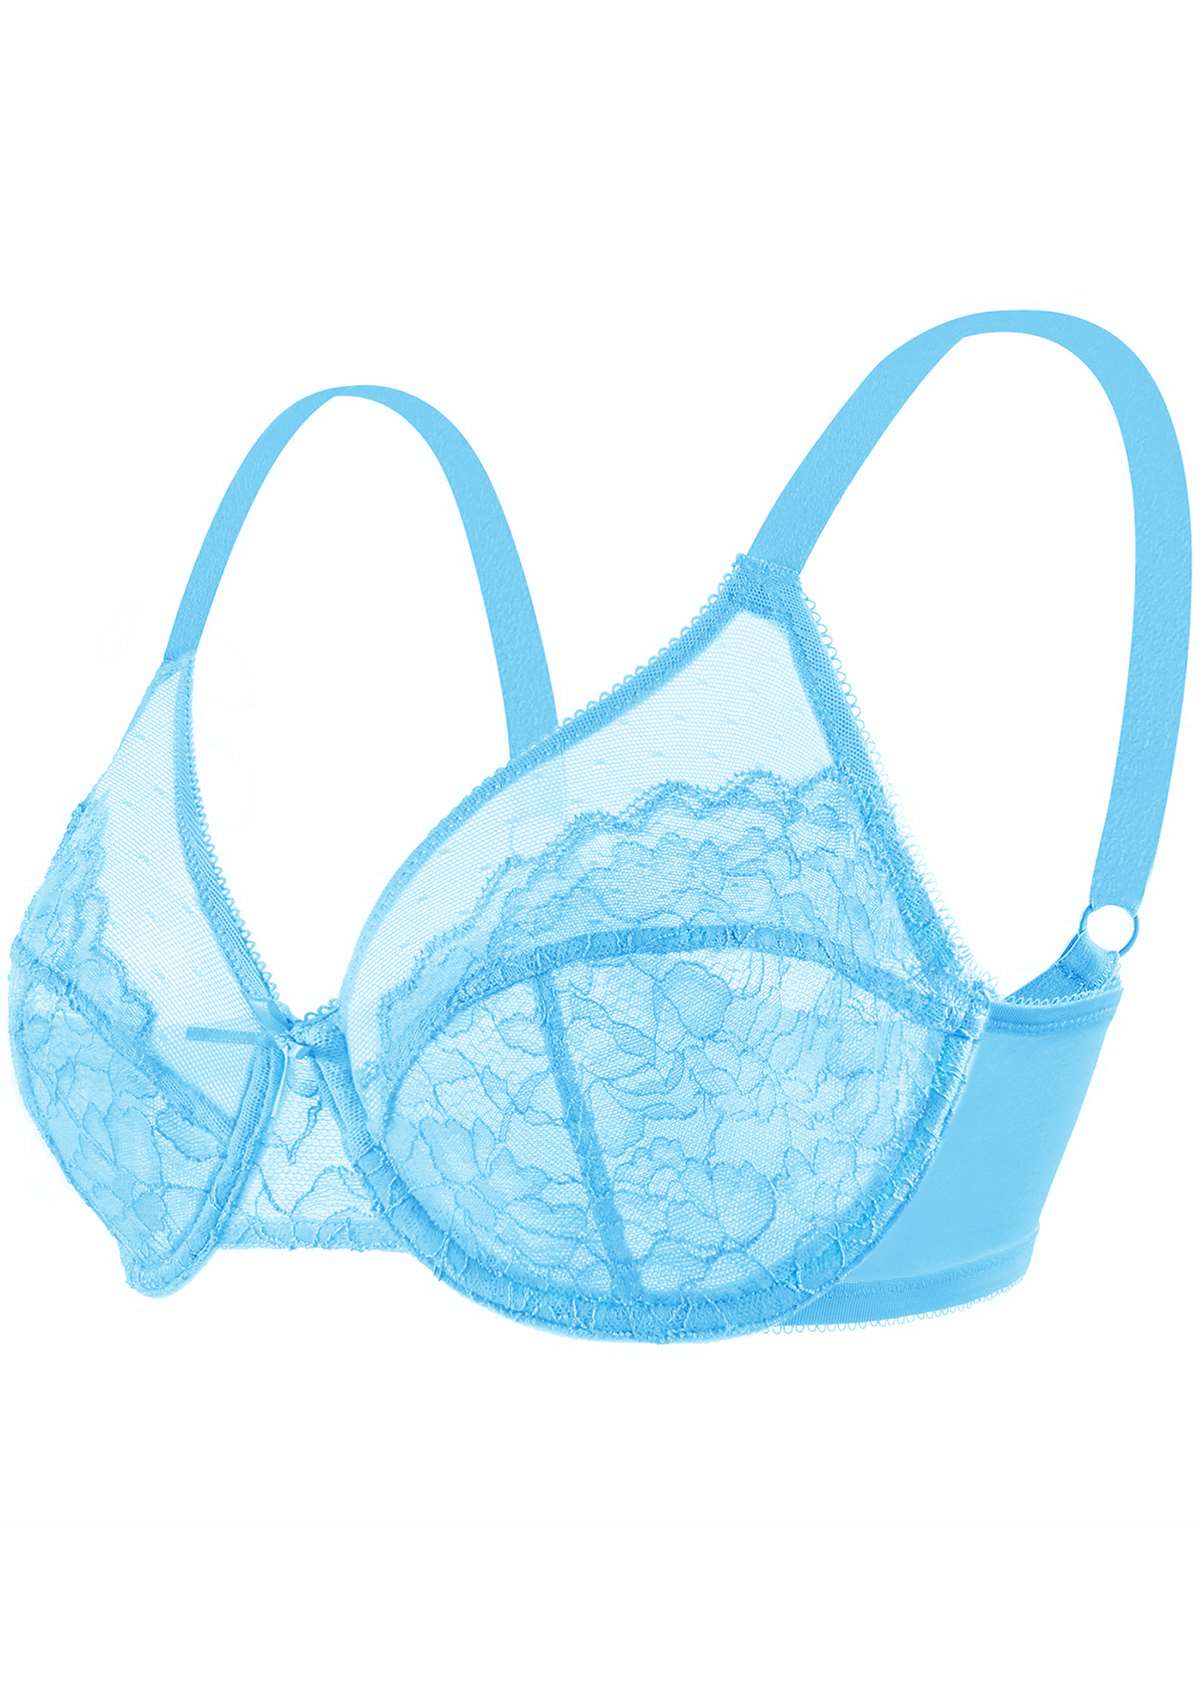 HSIA Enchante Minimizer Lace Bra: Full Support For Heavy Breasts - Capri Blue / 36 / G